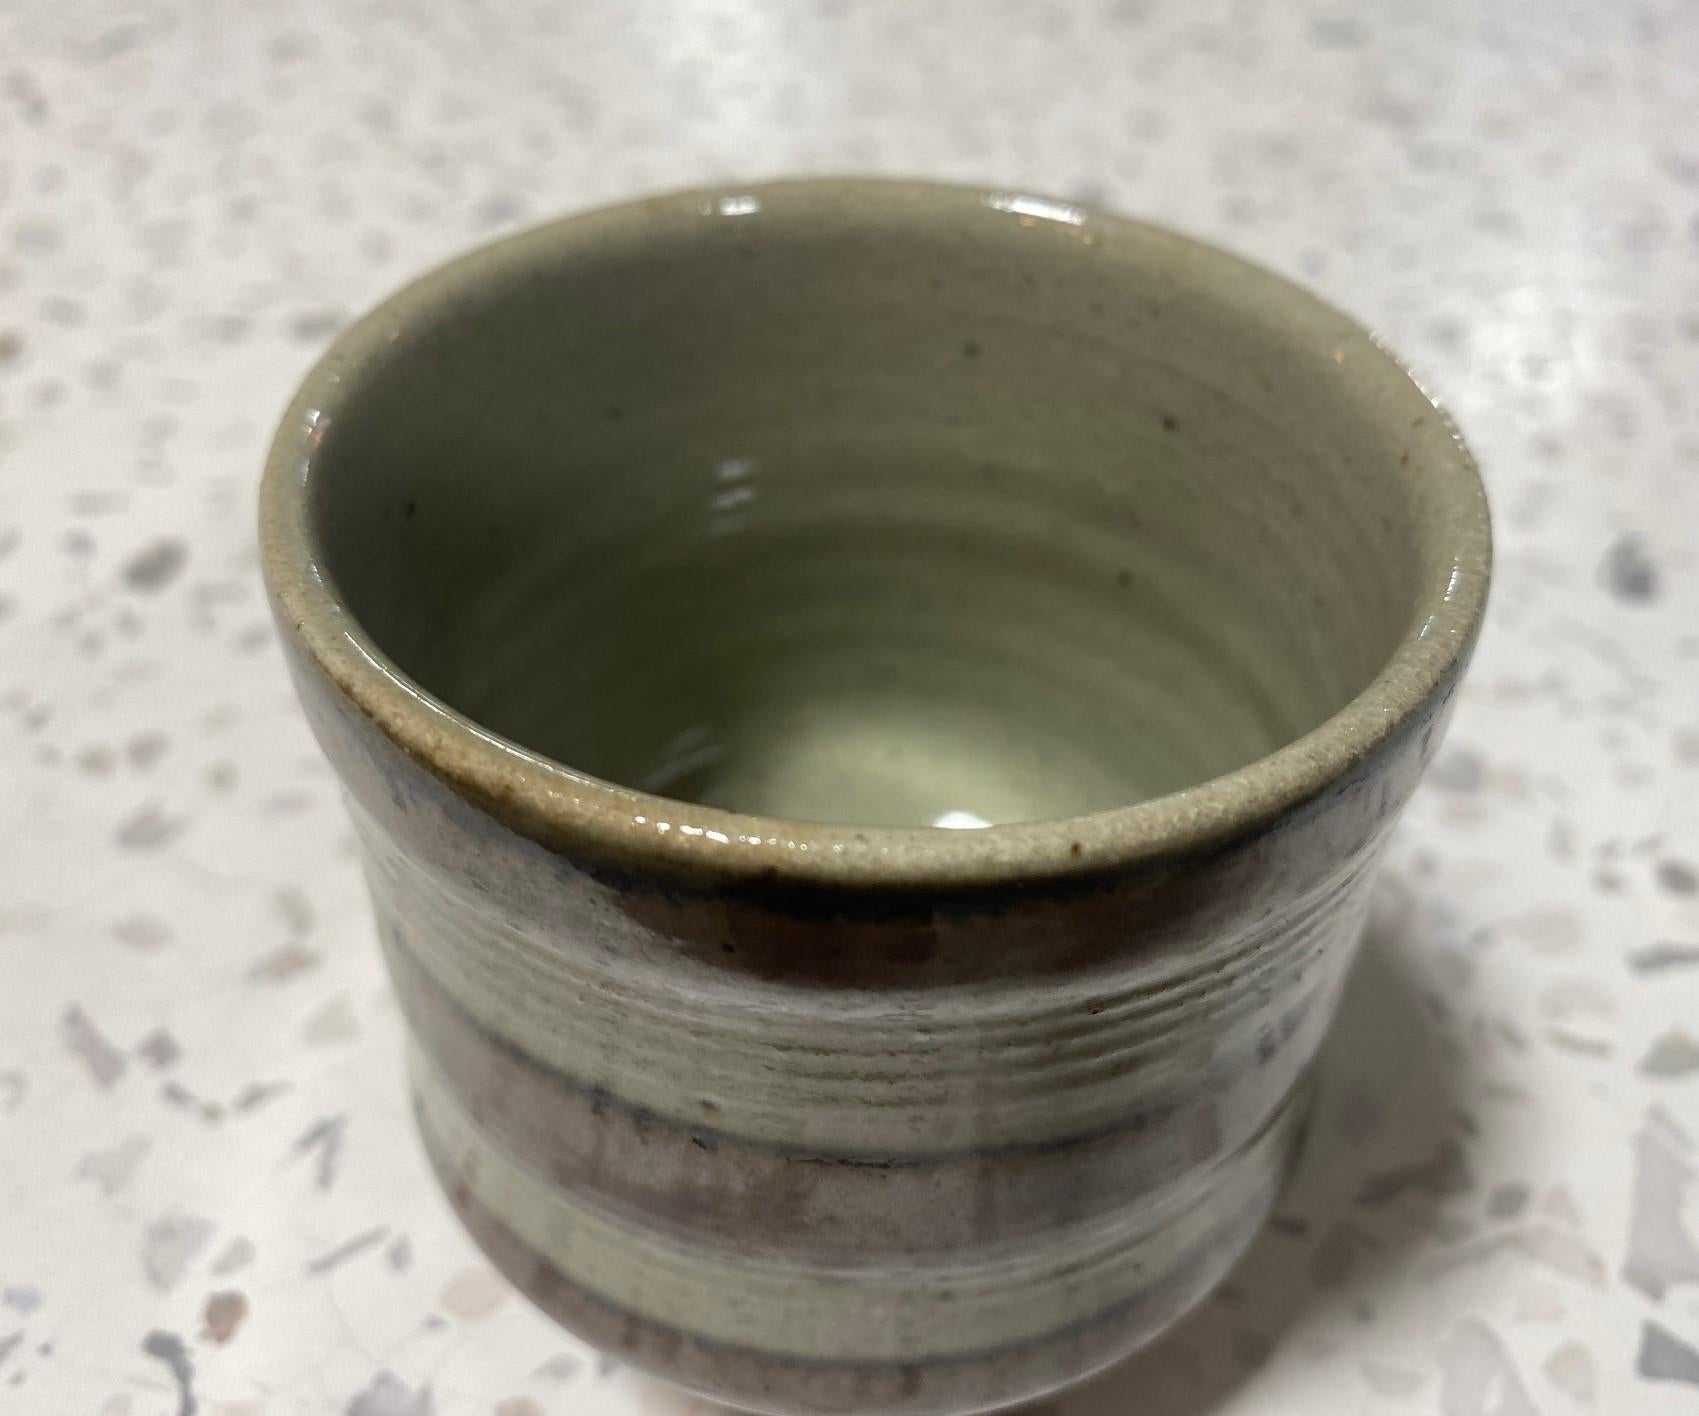 Shoji Hamada Mingei Kakiyu Kaki Glaze Japanese Pottery Yunomi Teacup Signed Box In Good Condition For Sale In Studio City, CA